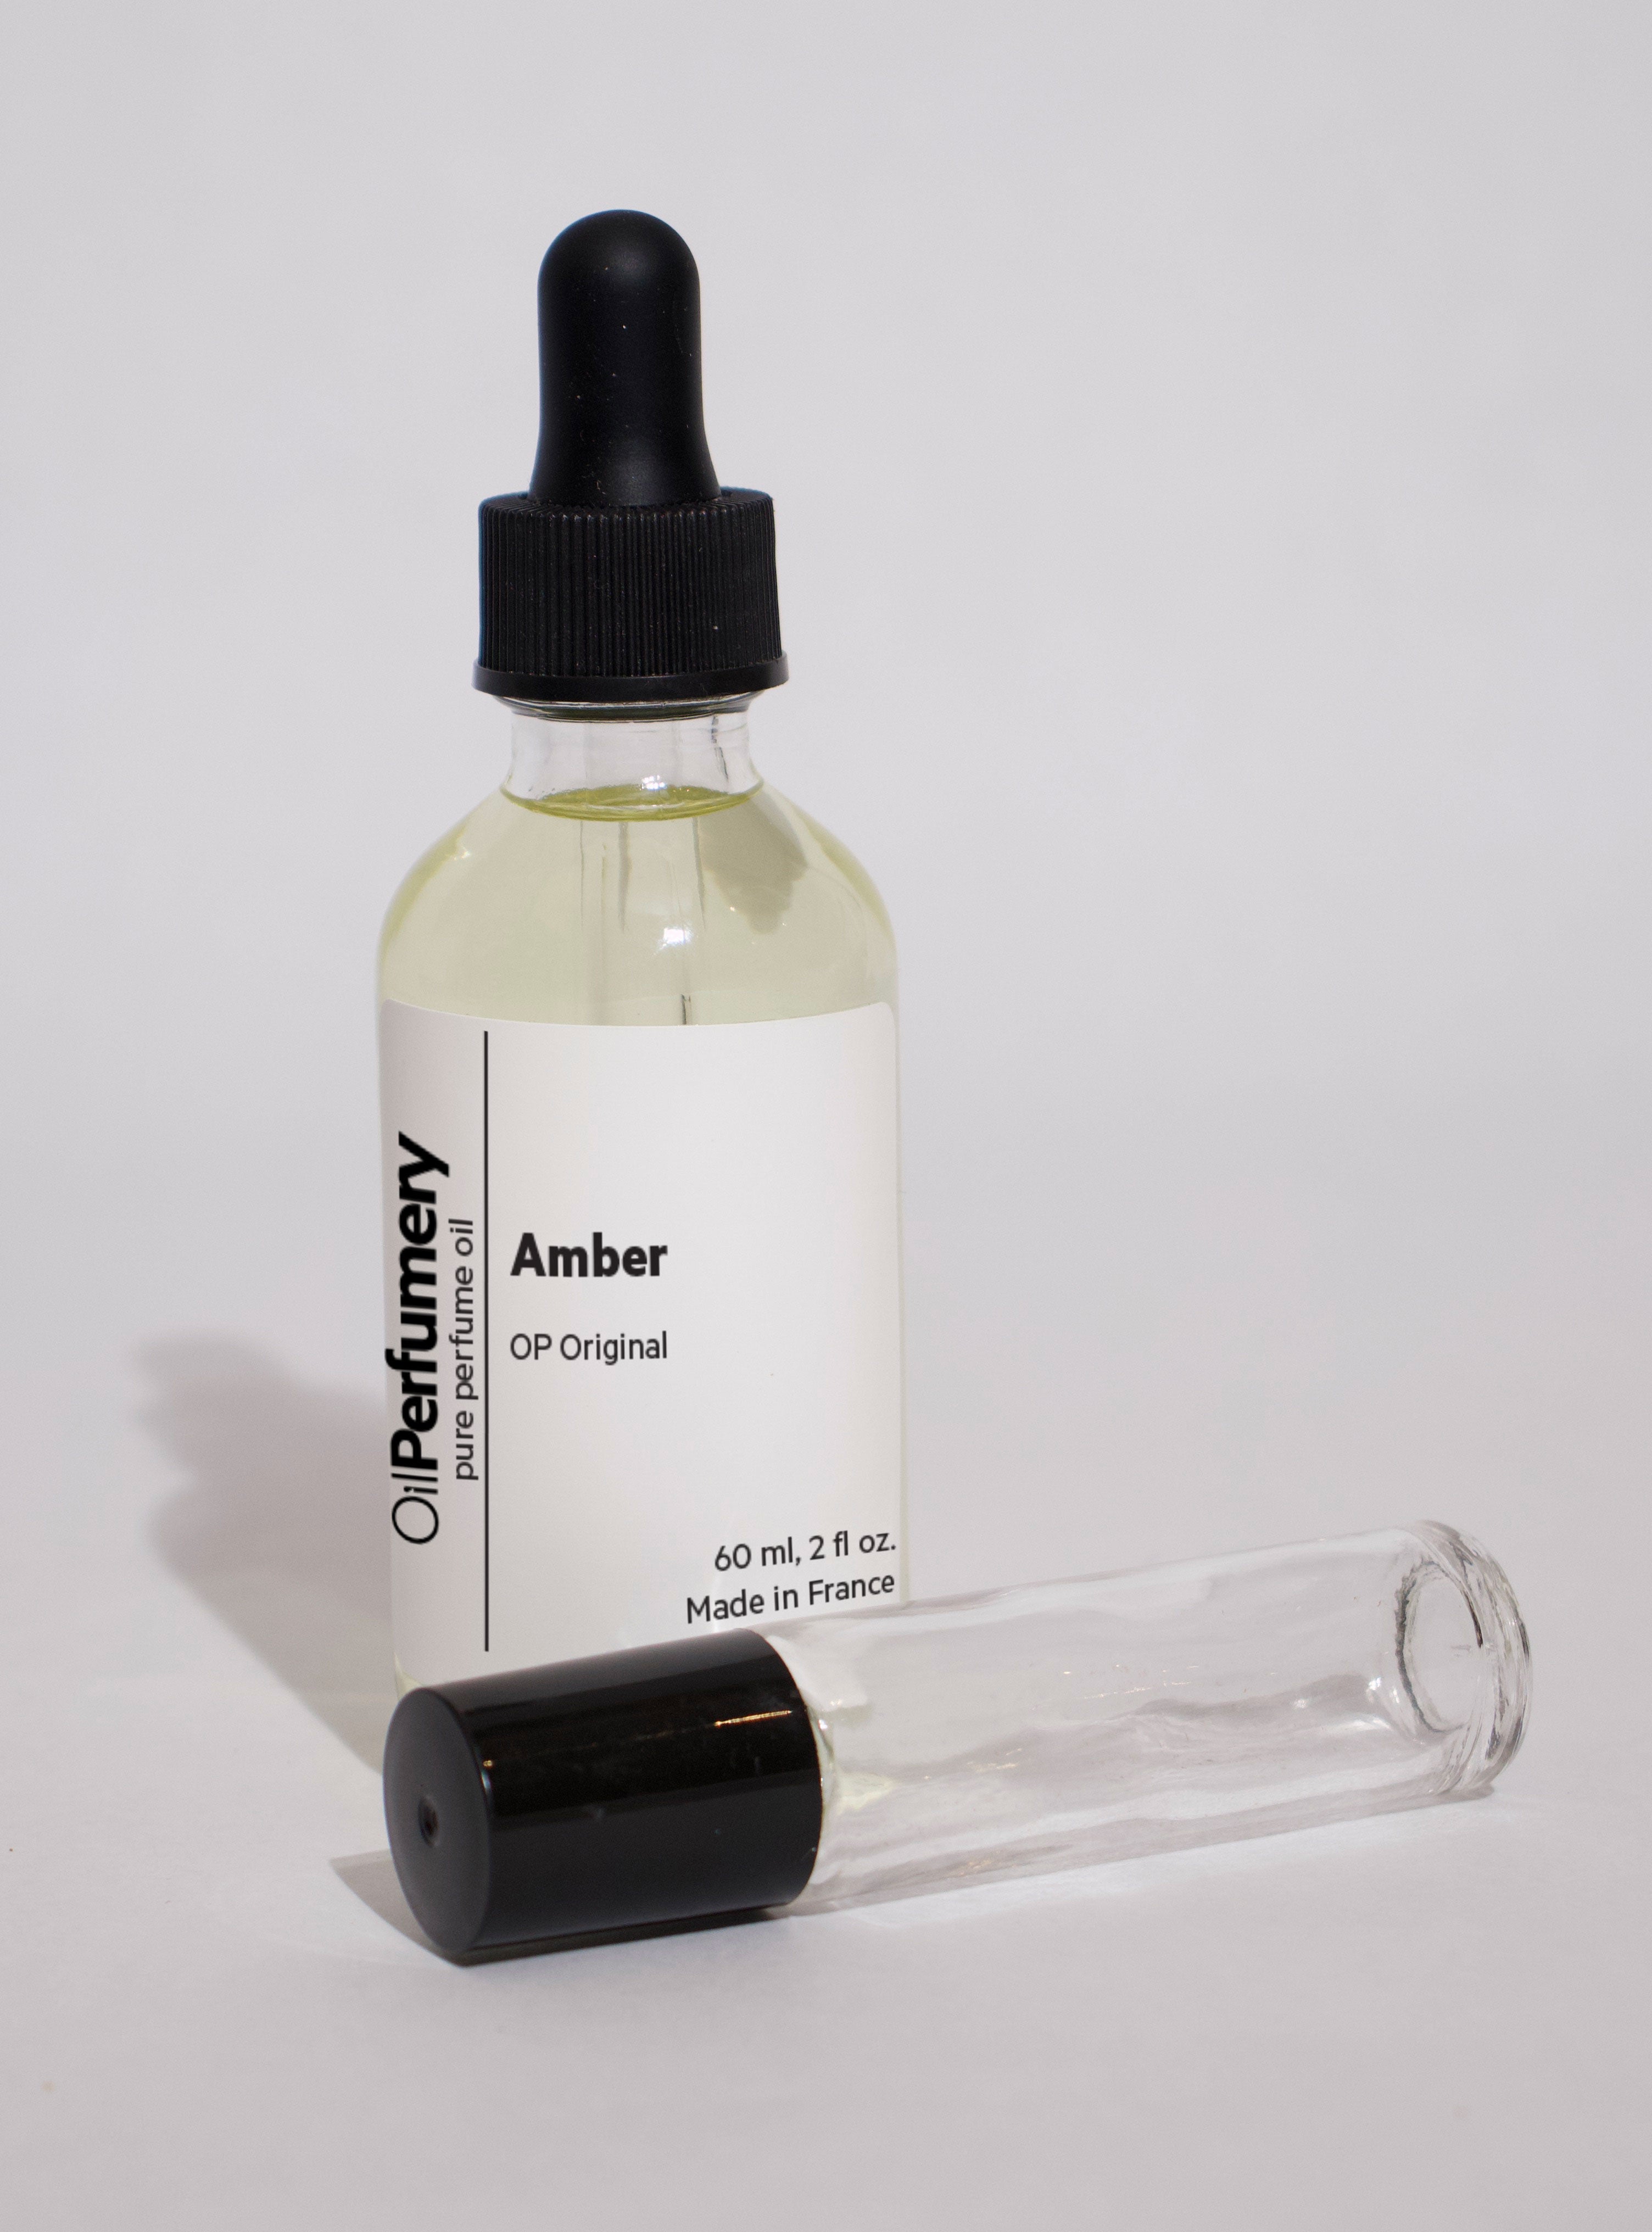 OP Original - Amber – Oil Perfumery